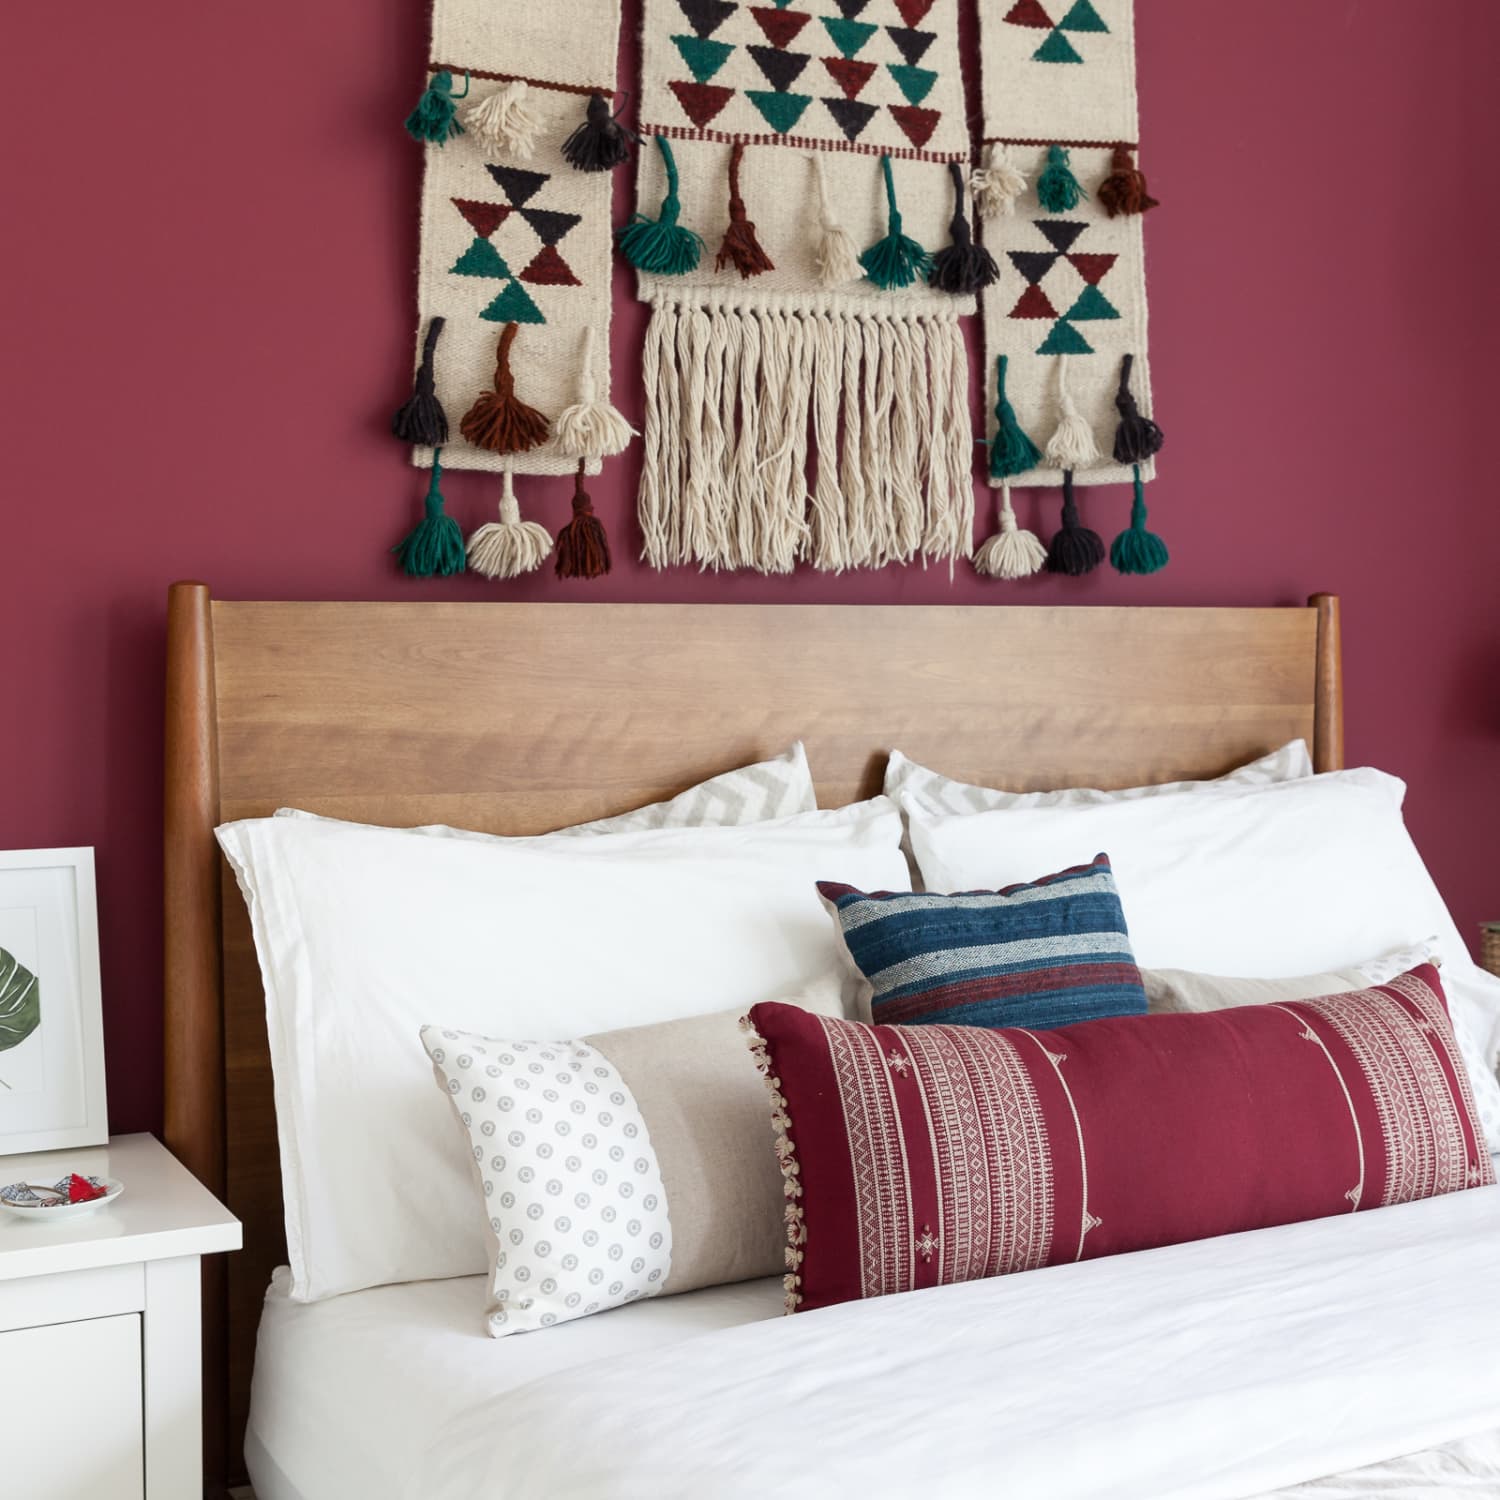 Where to Put Decorative Pillows When Sleeping: 7 Smart Ideas